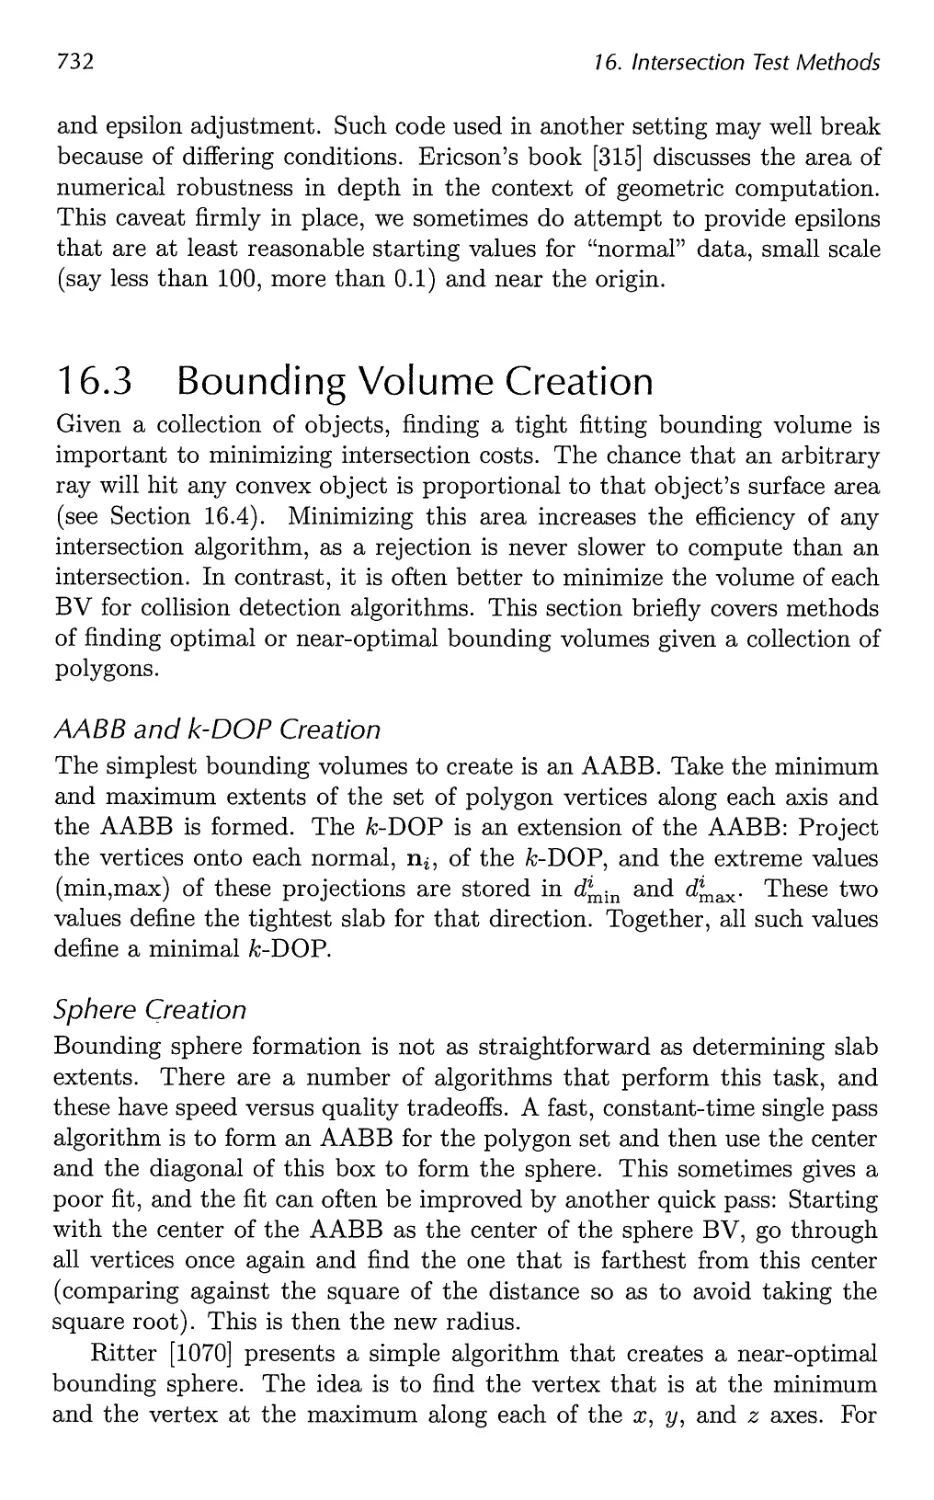 16.3 Bounding Volume Creation